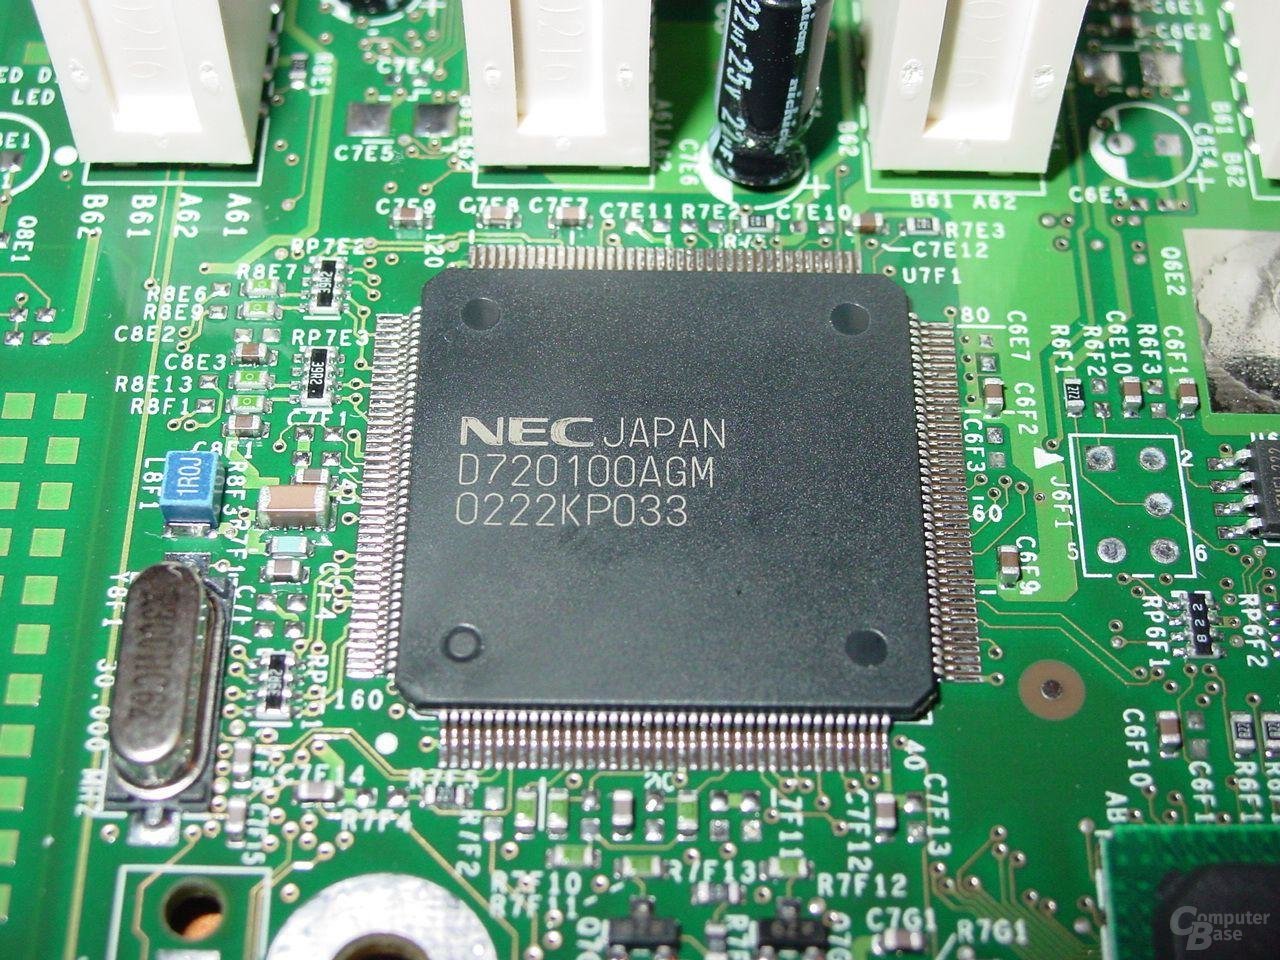 D850EMV2 - NEC USB2.0